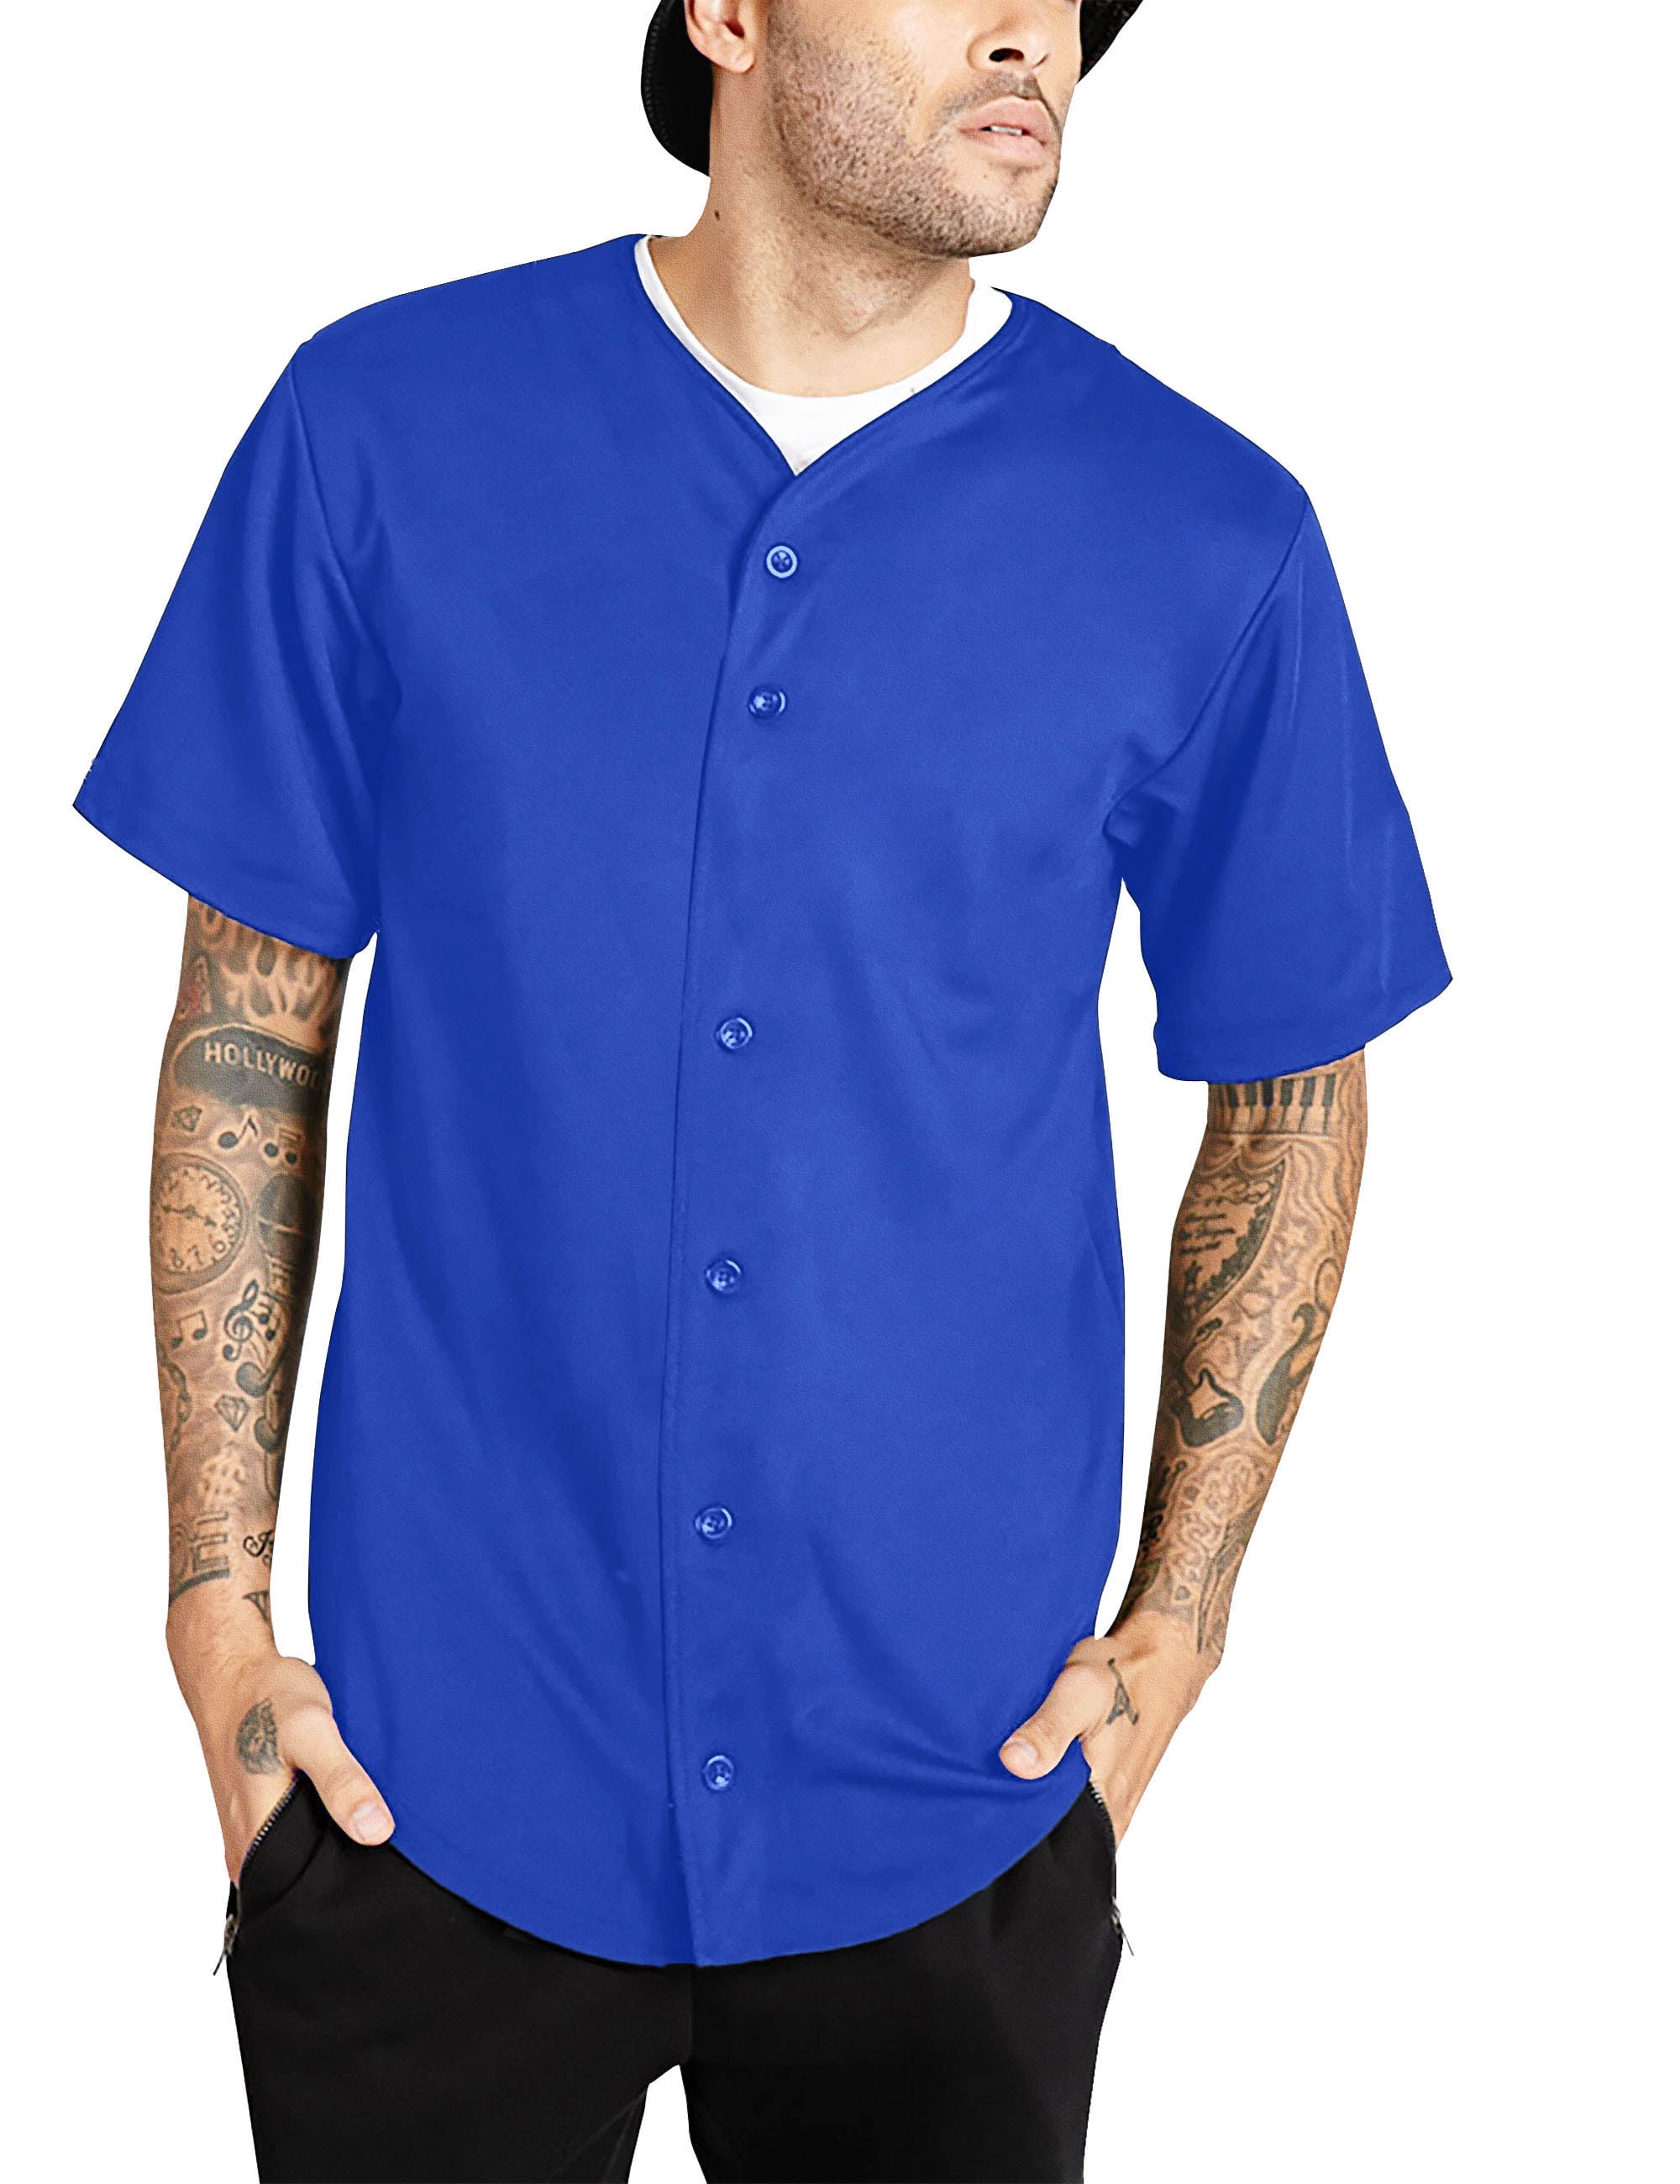 Ma Croix Men's Cotton Baseball Jersey Plain Button Down Short Sleeve  Atheletic Sports Tee Shirts 